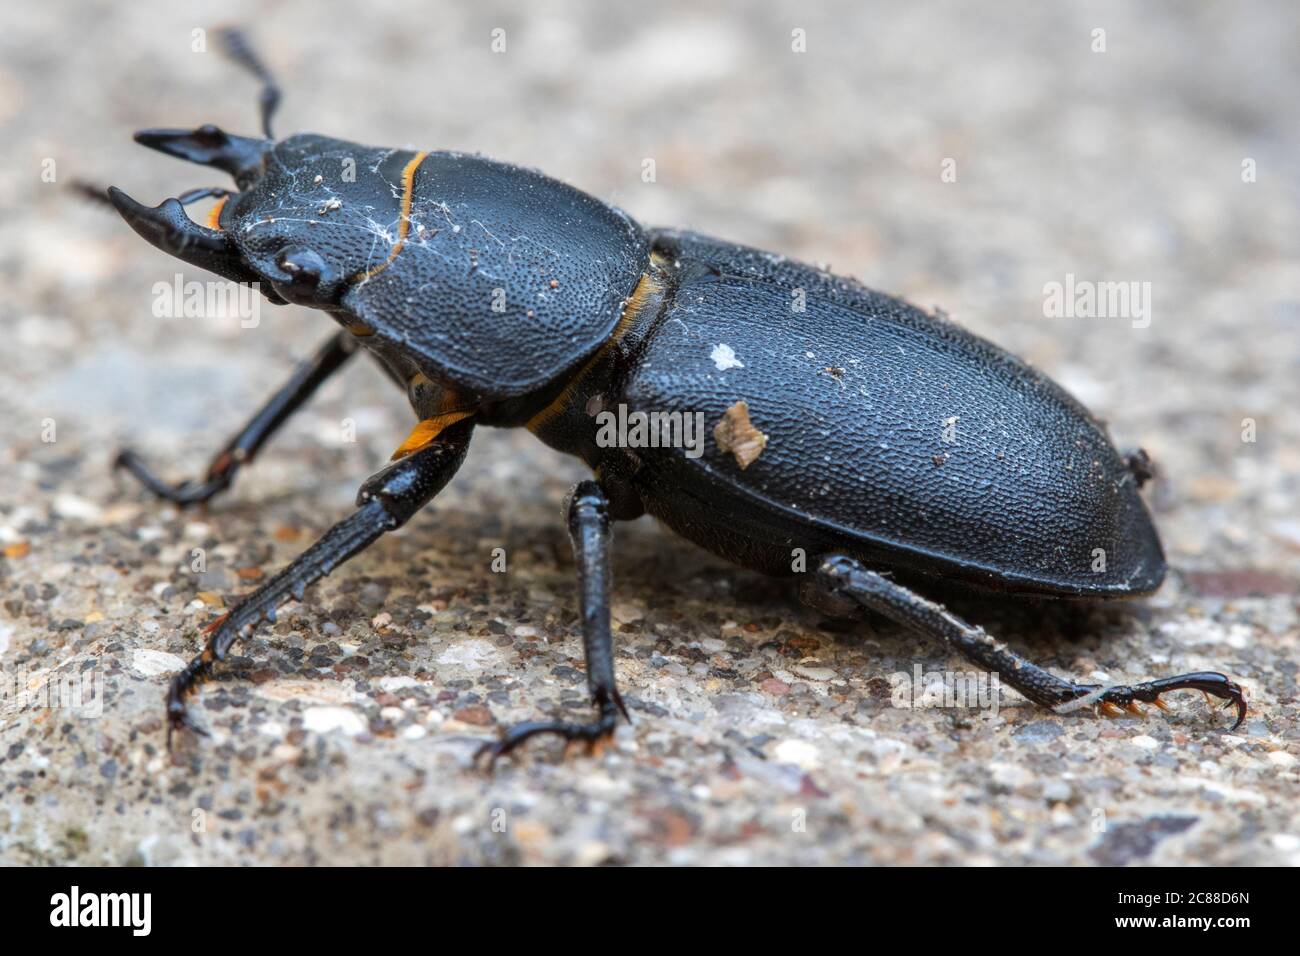 Stag Beetle (Lucanus cervus) on a paving slab Stock Photo